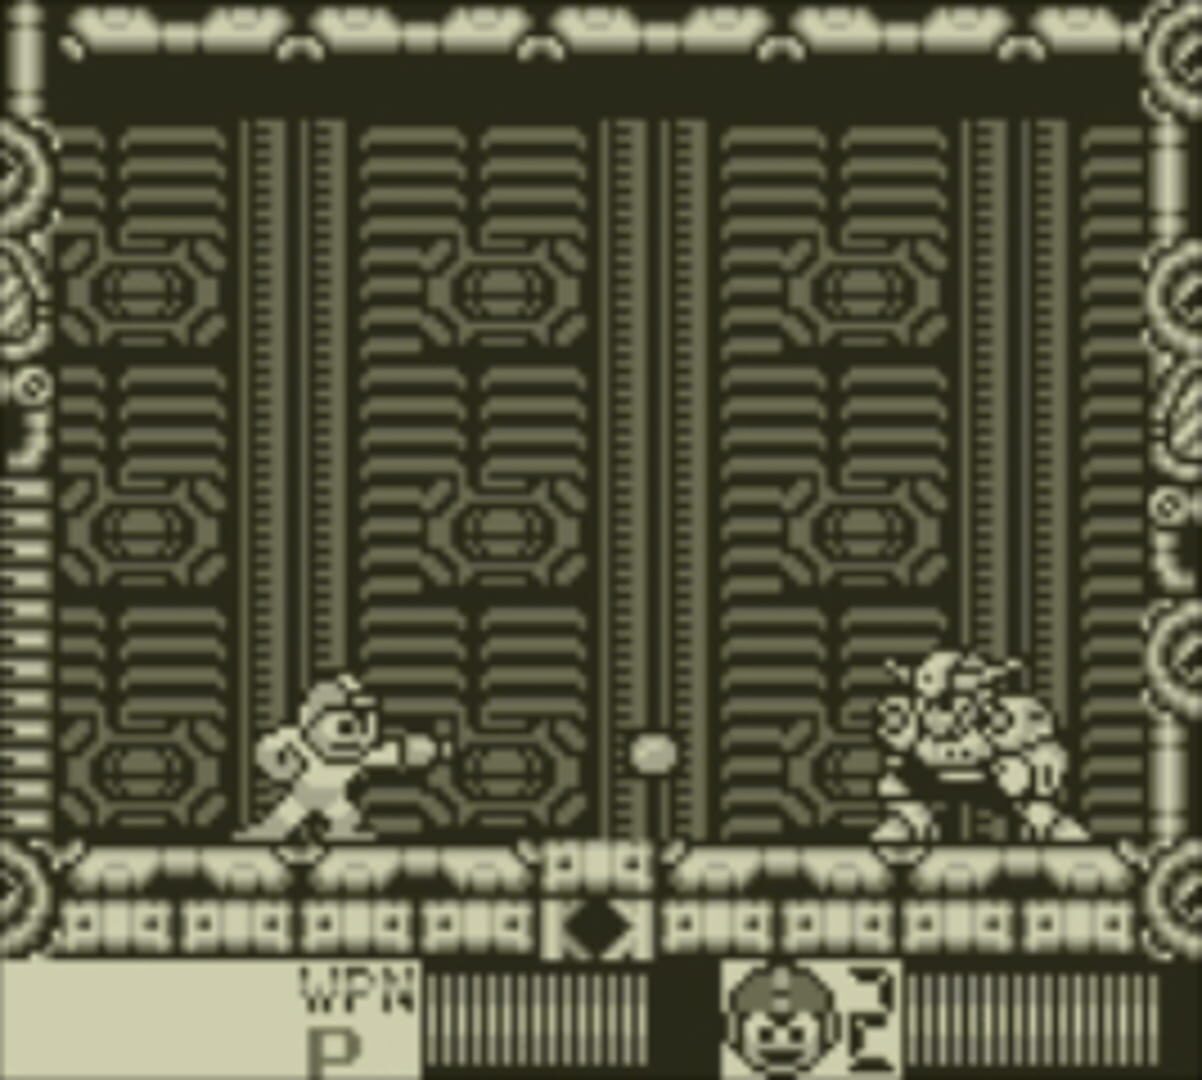 Screenshot for Mega Man IV